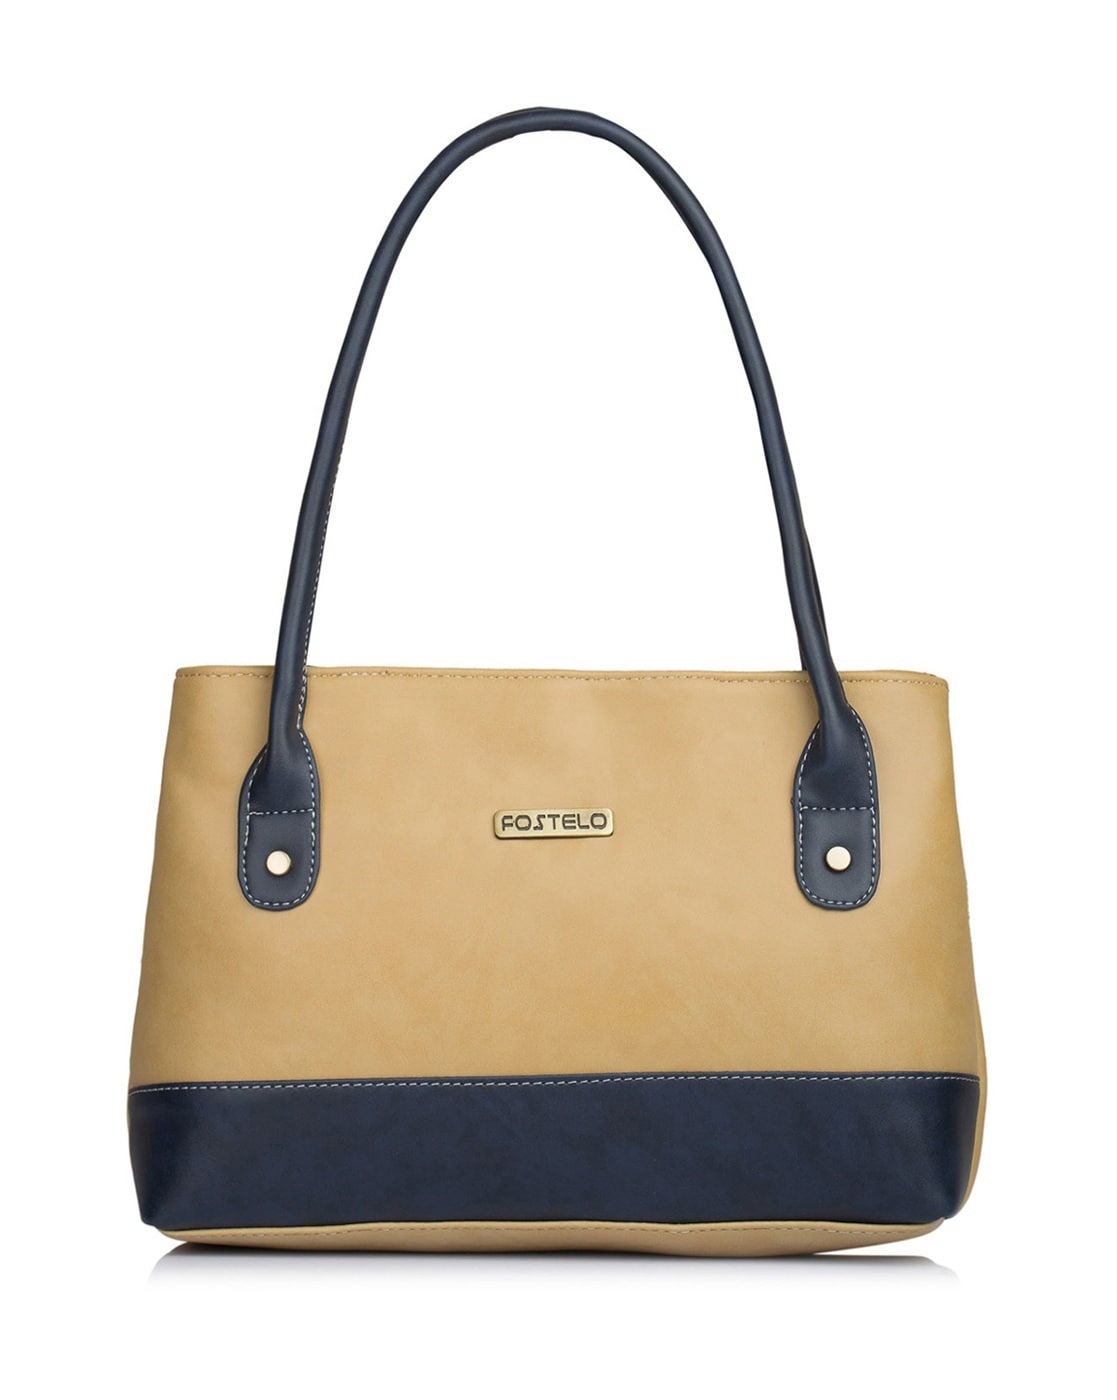 ZARA Brand Bag | Bags, Branded bags, Handbag shopping